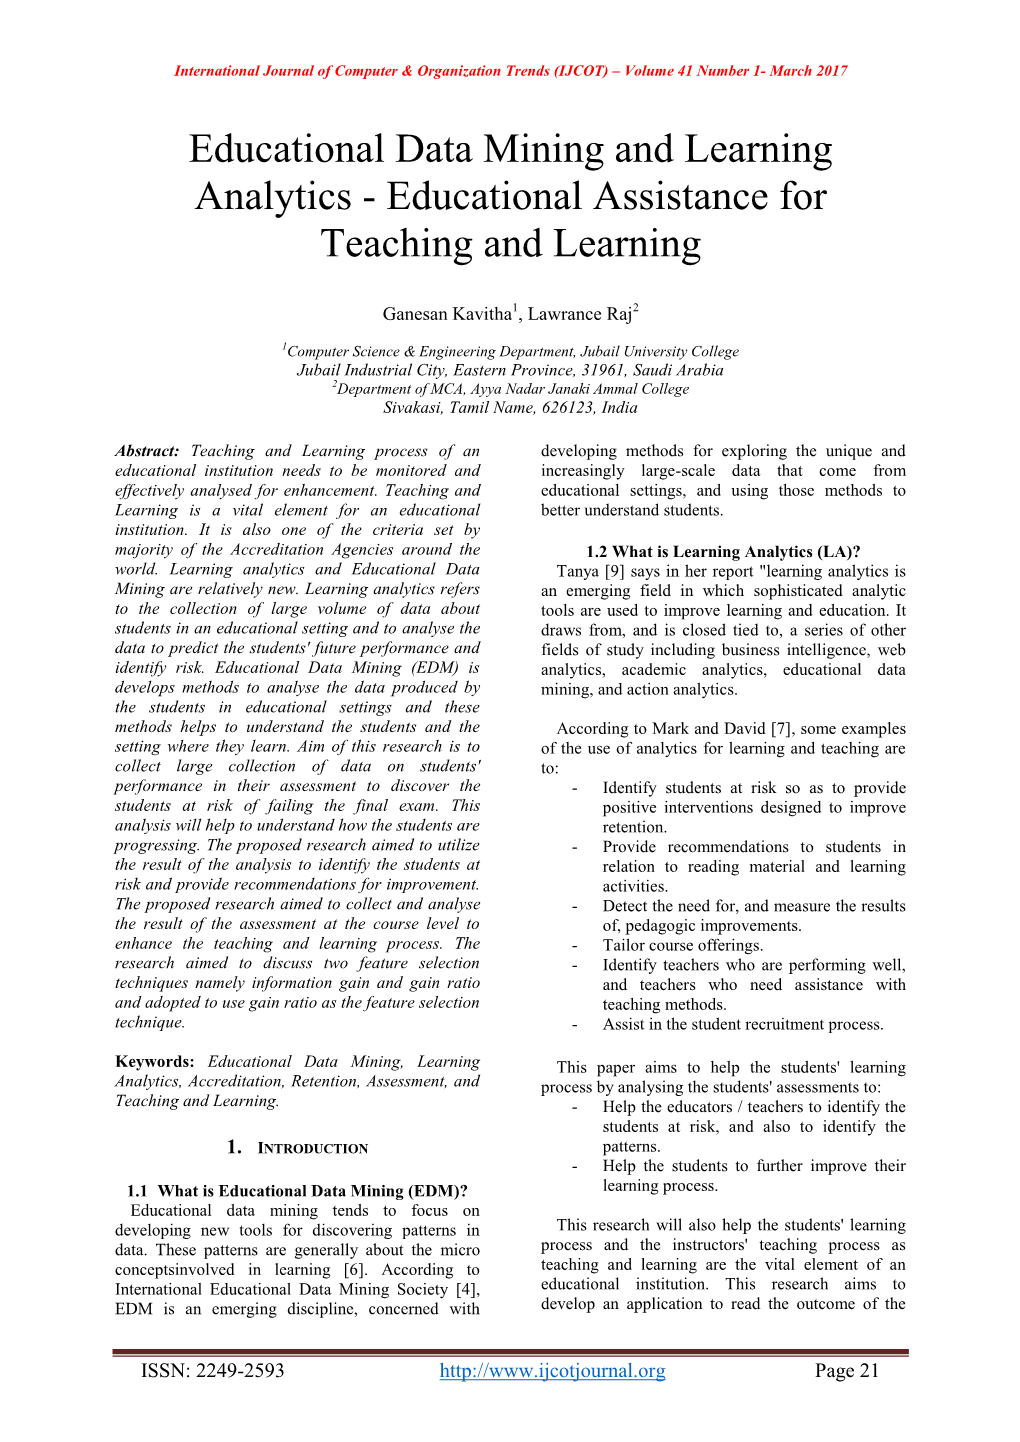 Educational Data Mining and Learning Analytics - Educational Assistance for Teaching and Learning